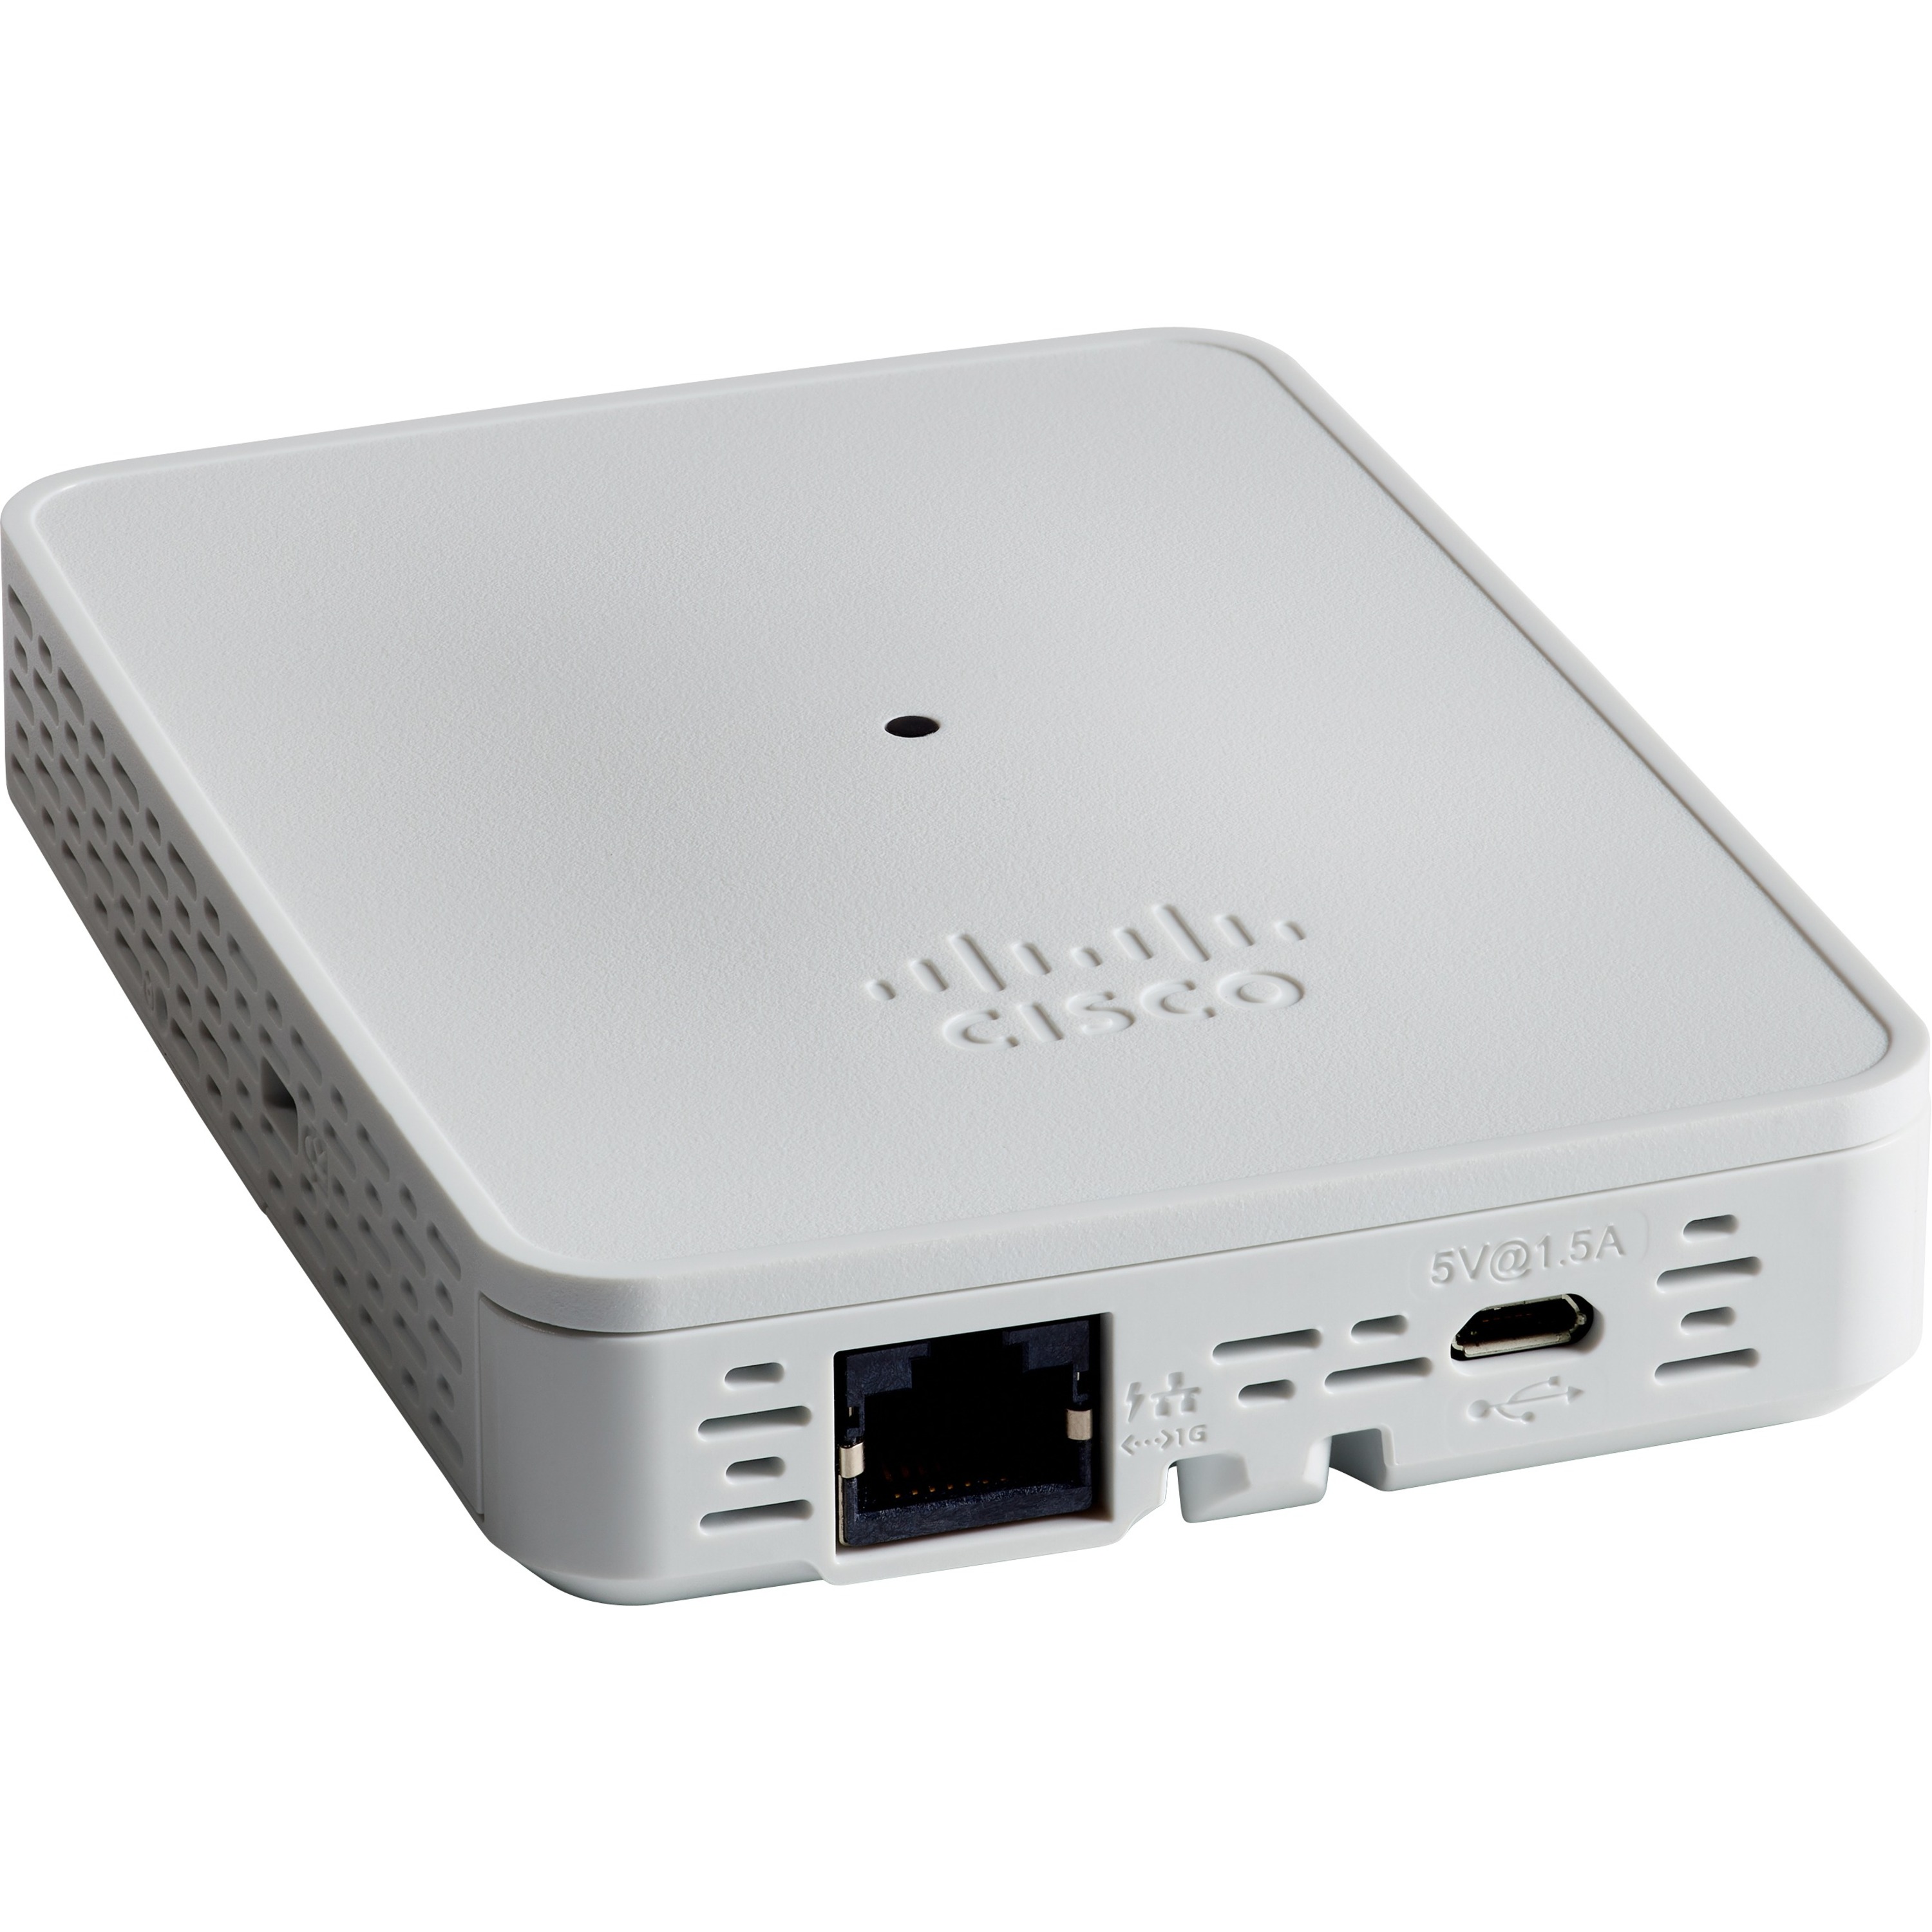 Cisco AP1800S IEEE 802.11ac Mbit/s Wireless Access Point